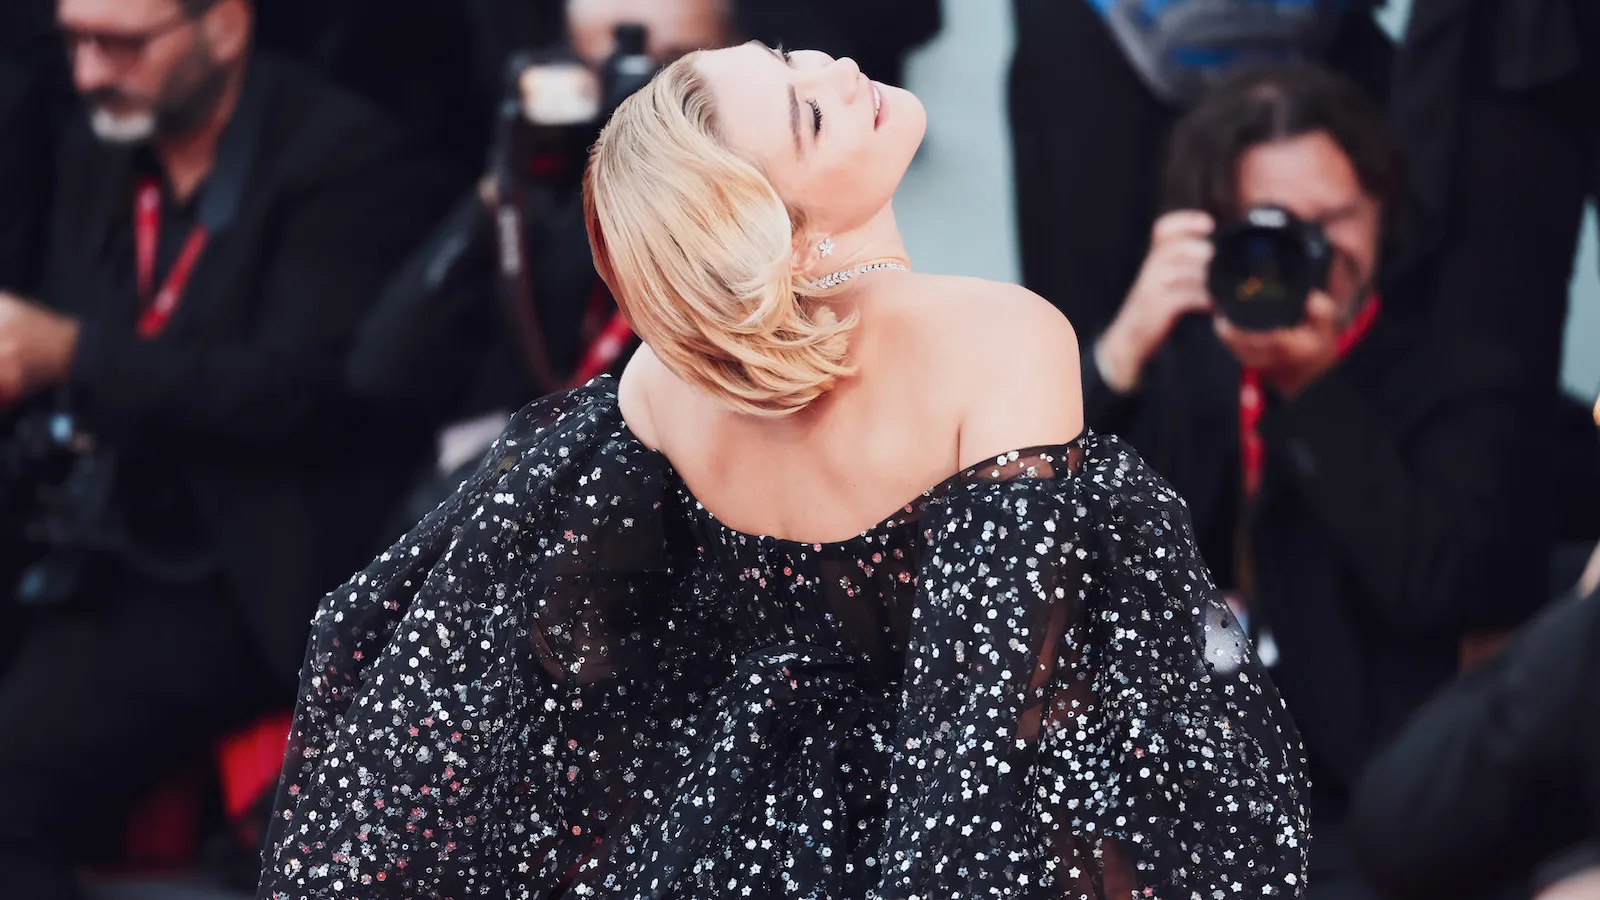 Venice Film Festival red carpet: The best celebrity fashion on show